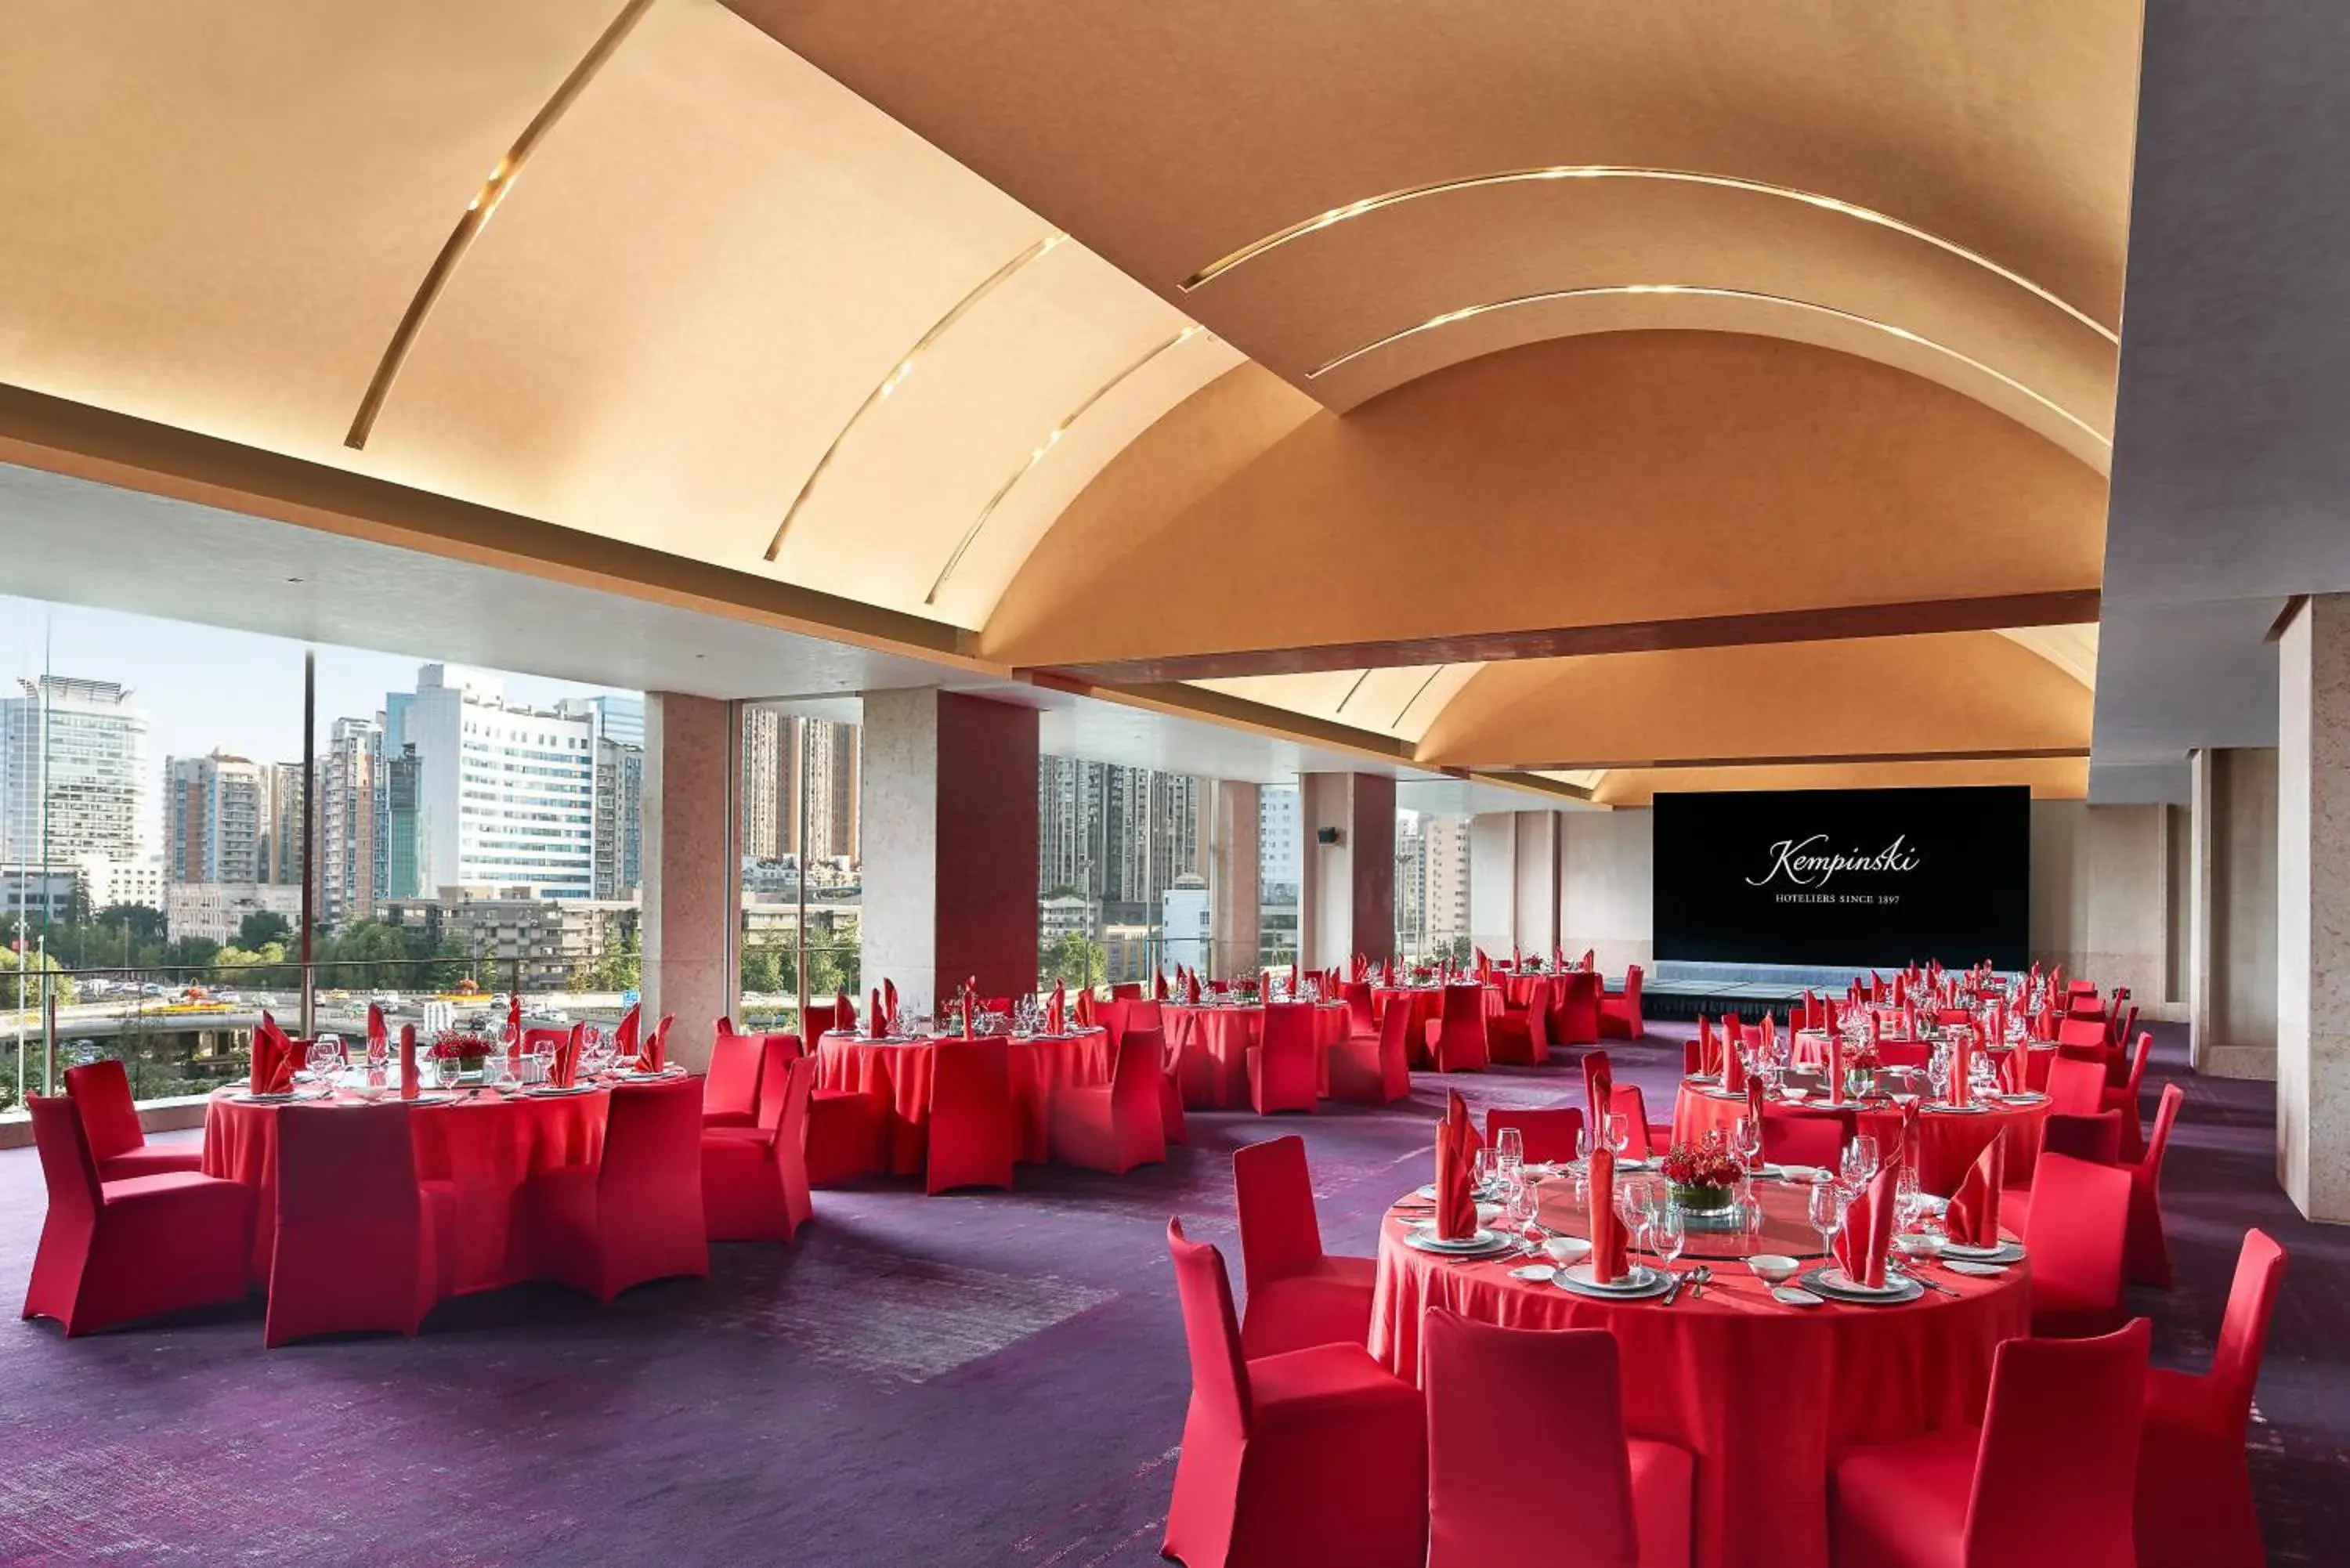 Banquet/Function facilities, Banquet Facilities in Kempinski Hotel Chengdu